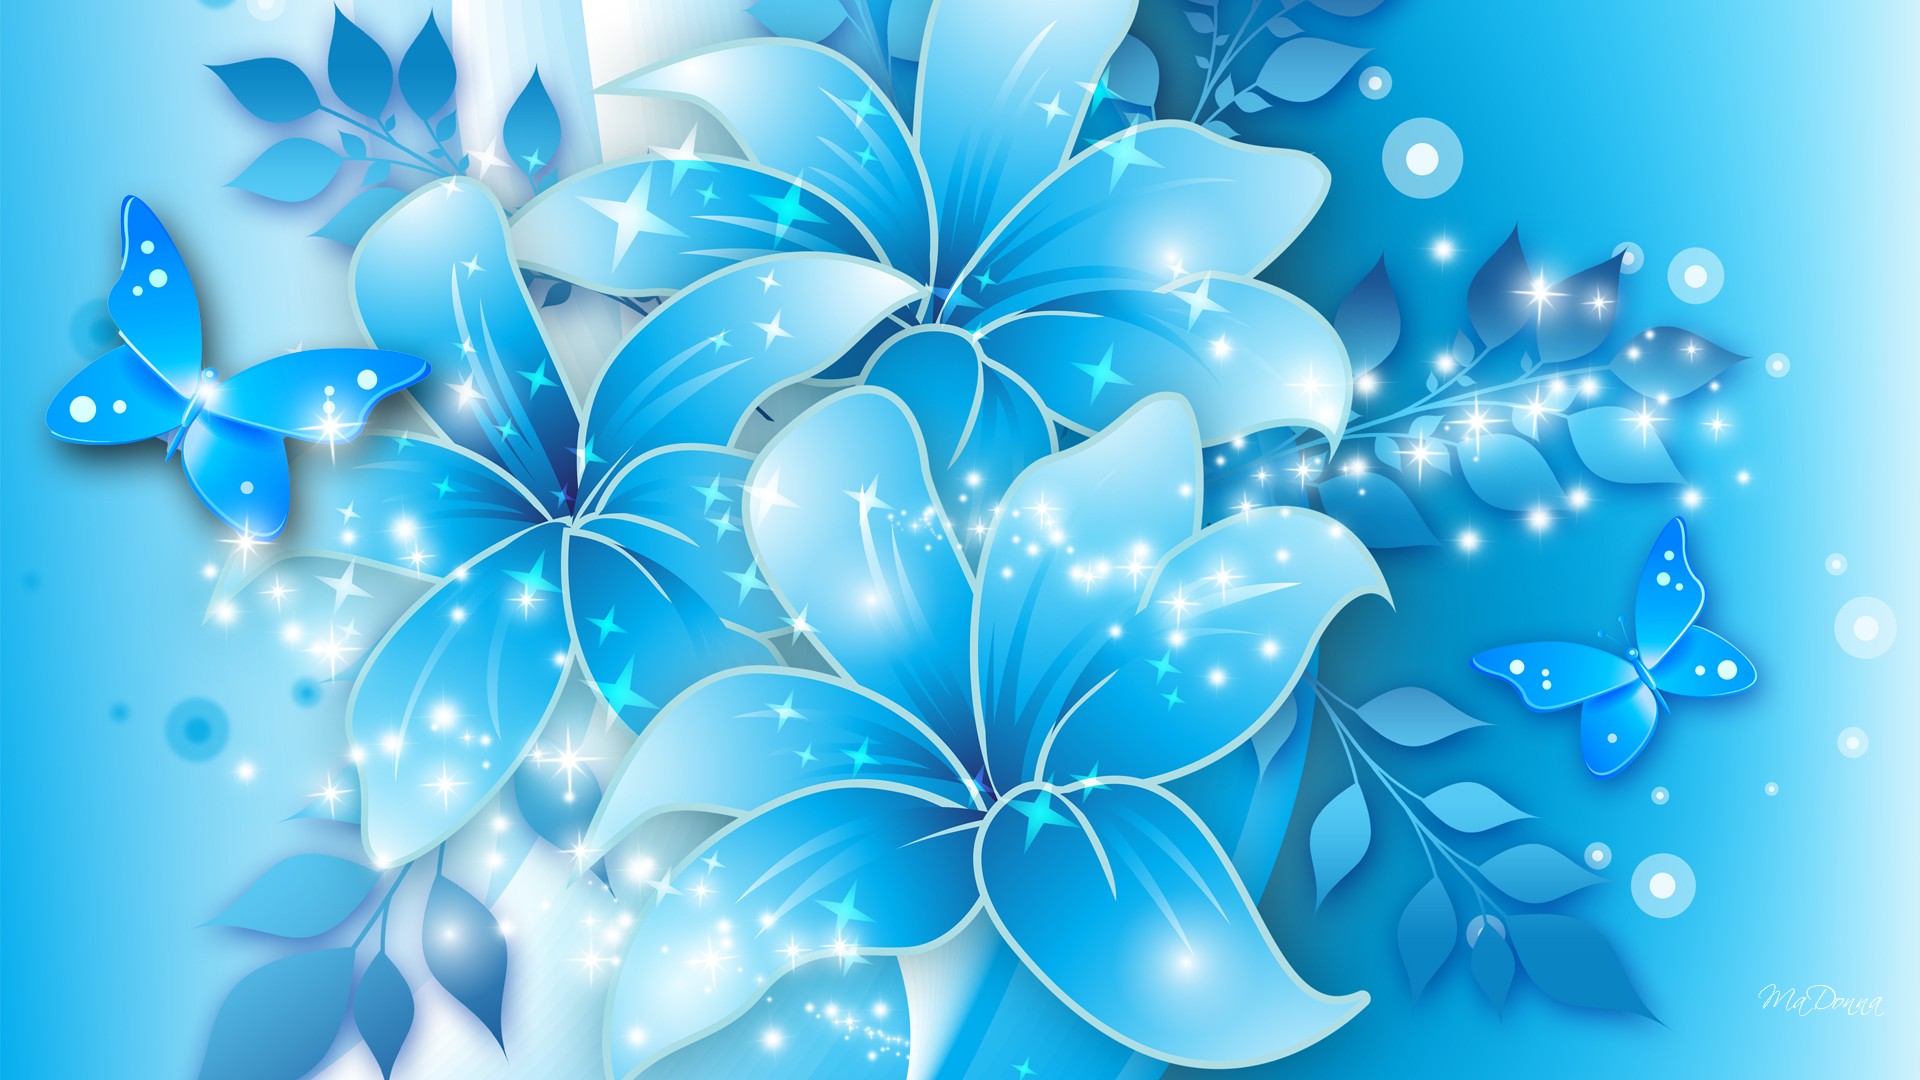 Neon Blue Flowers Wallpaper Free cool backgrounds full hd